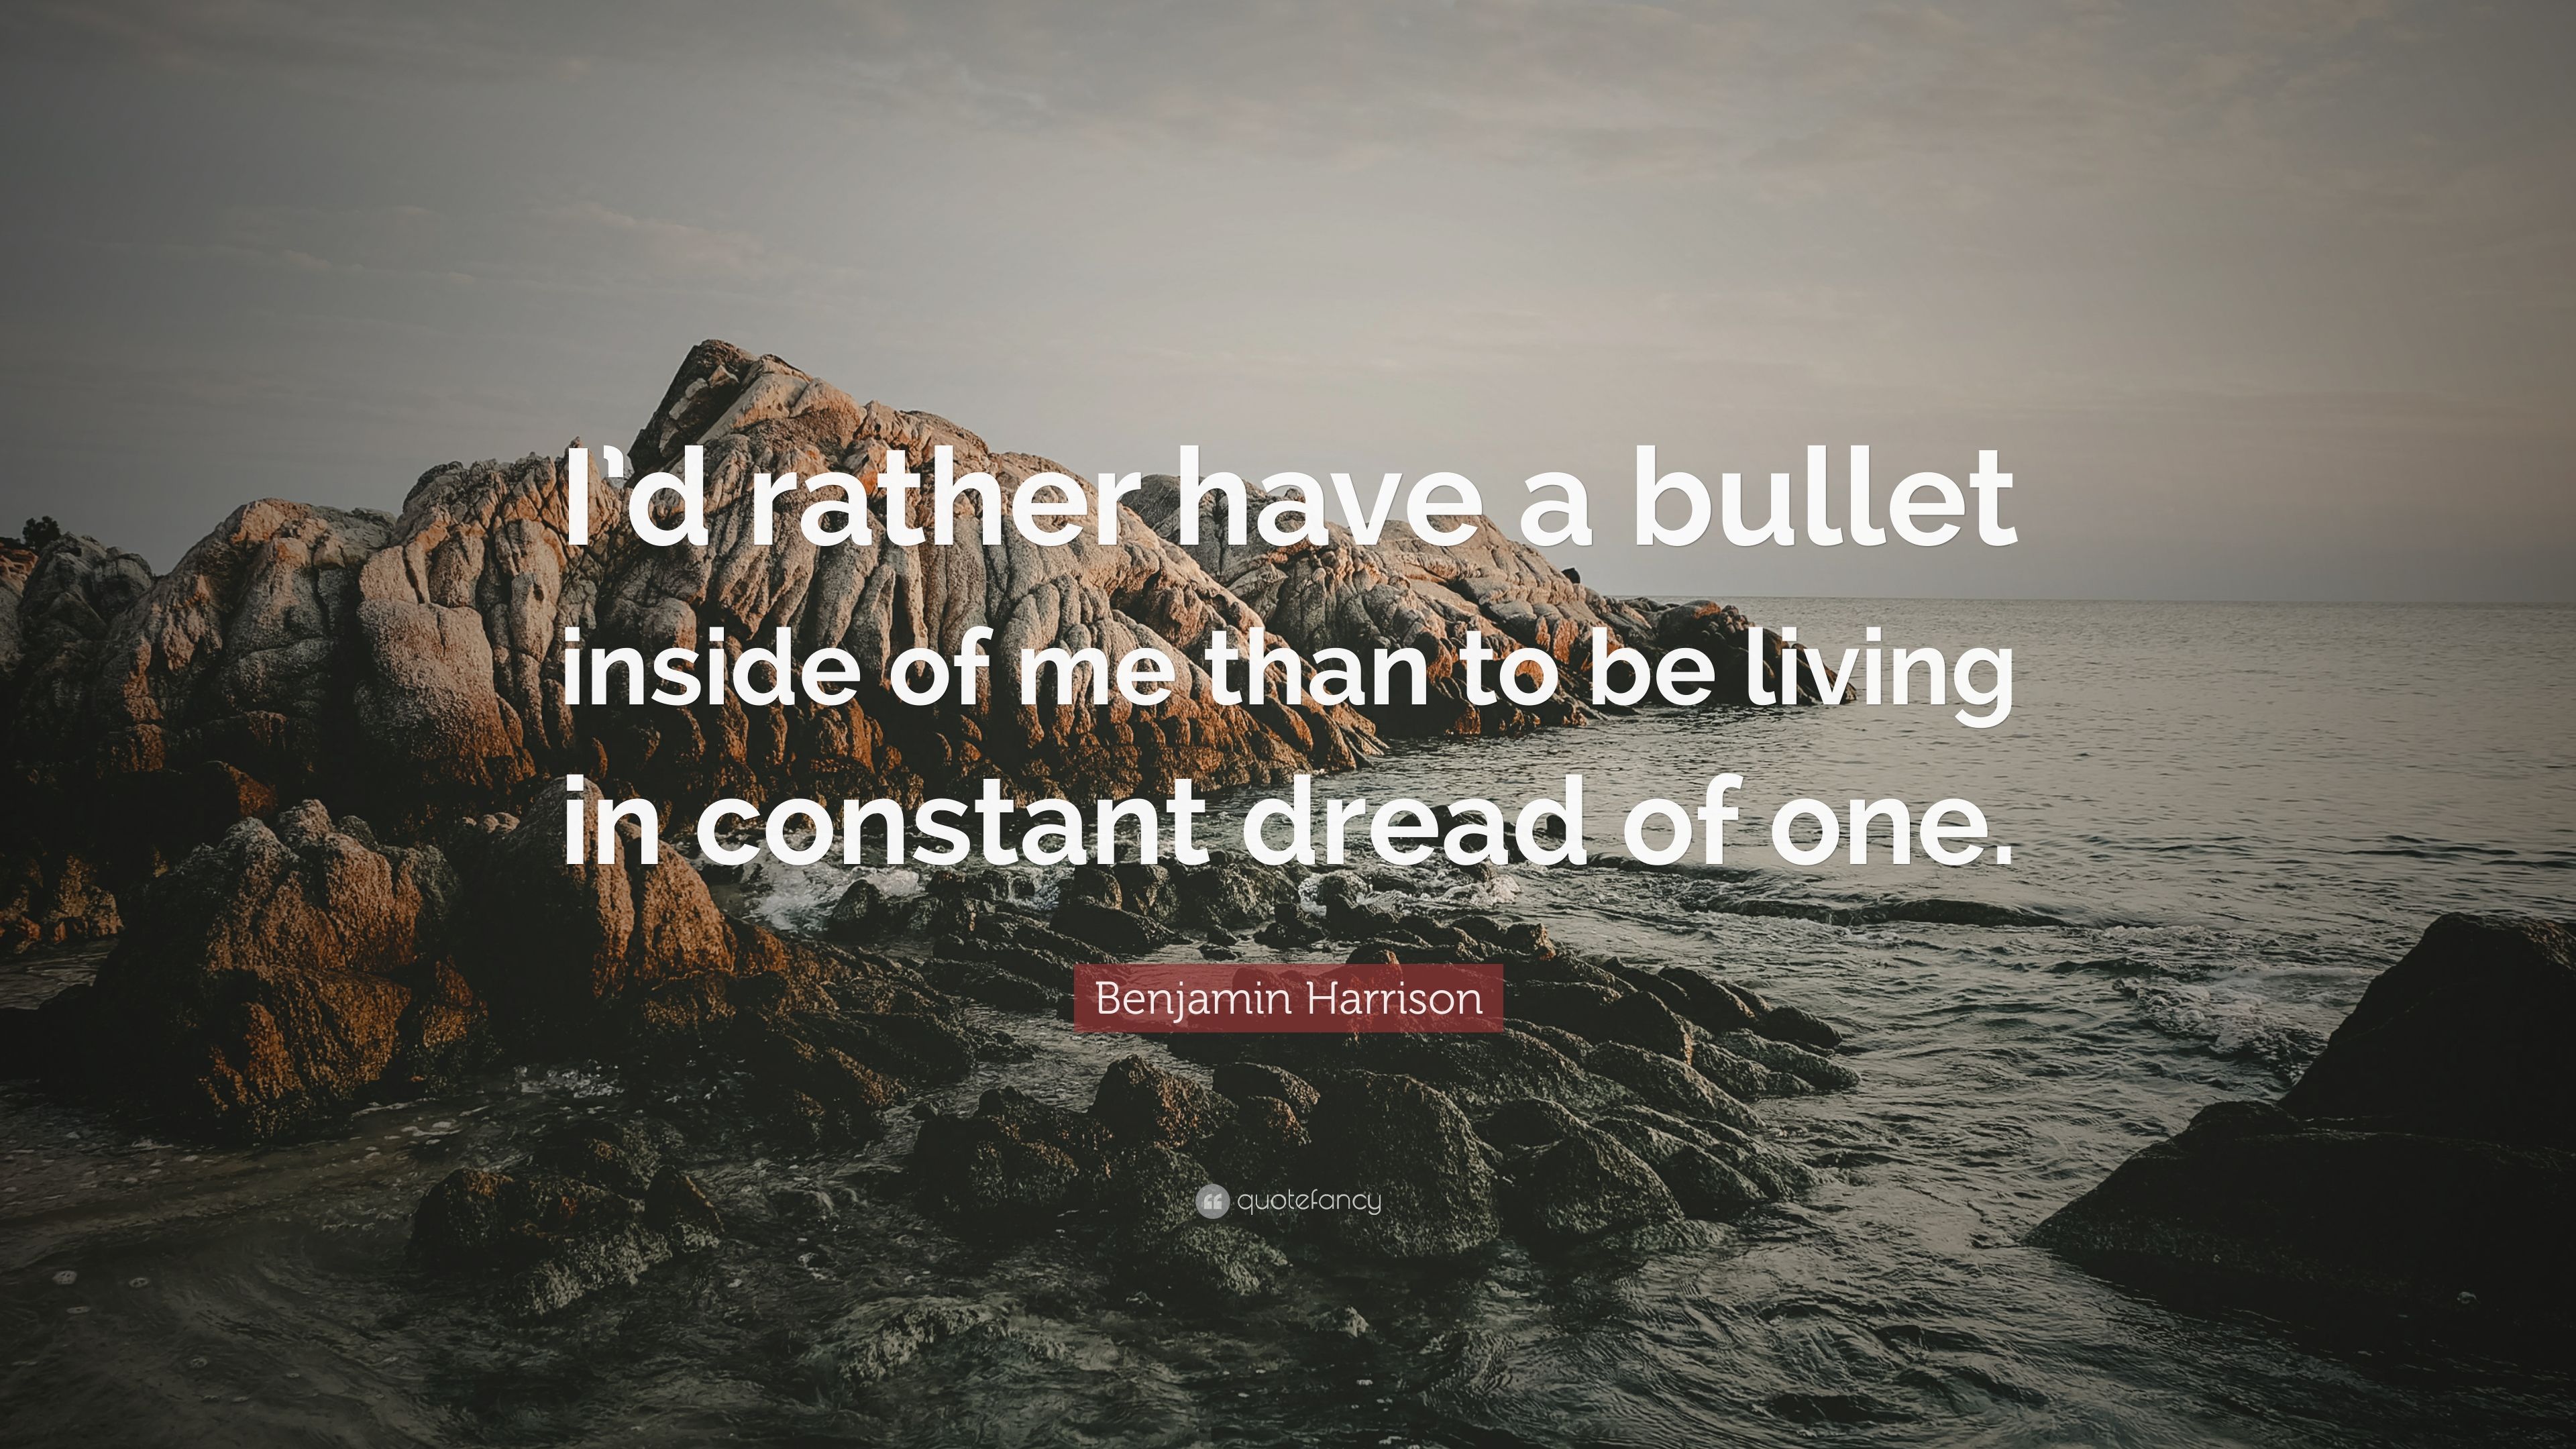 Benjamin Harrison Quote: “I'd rather have a bullet inside of me